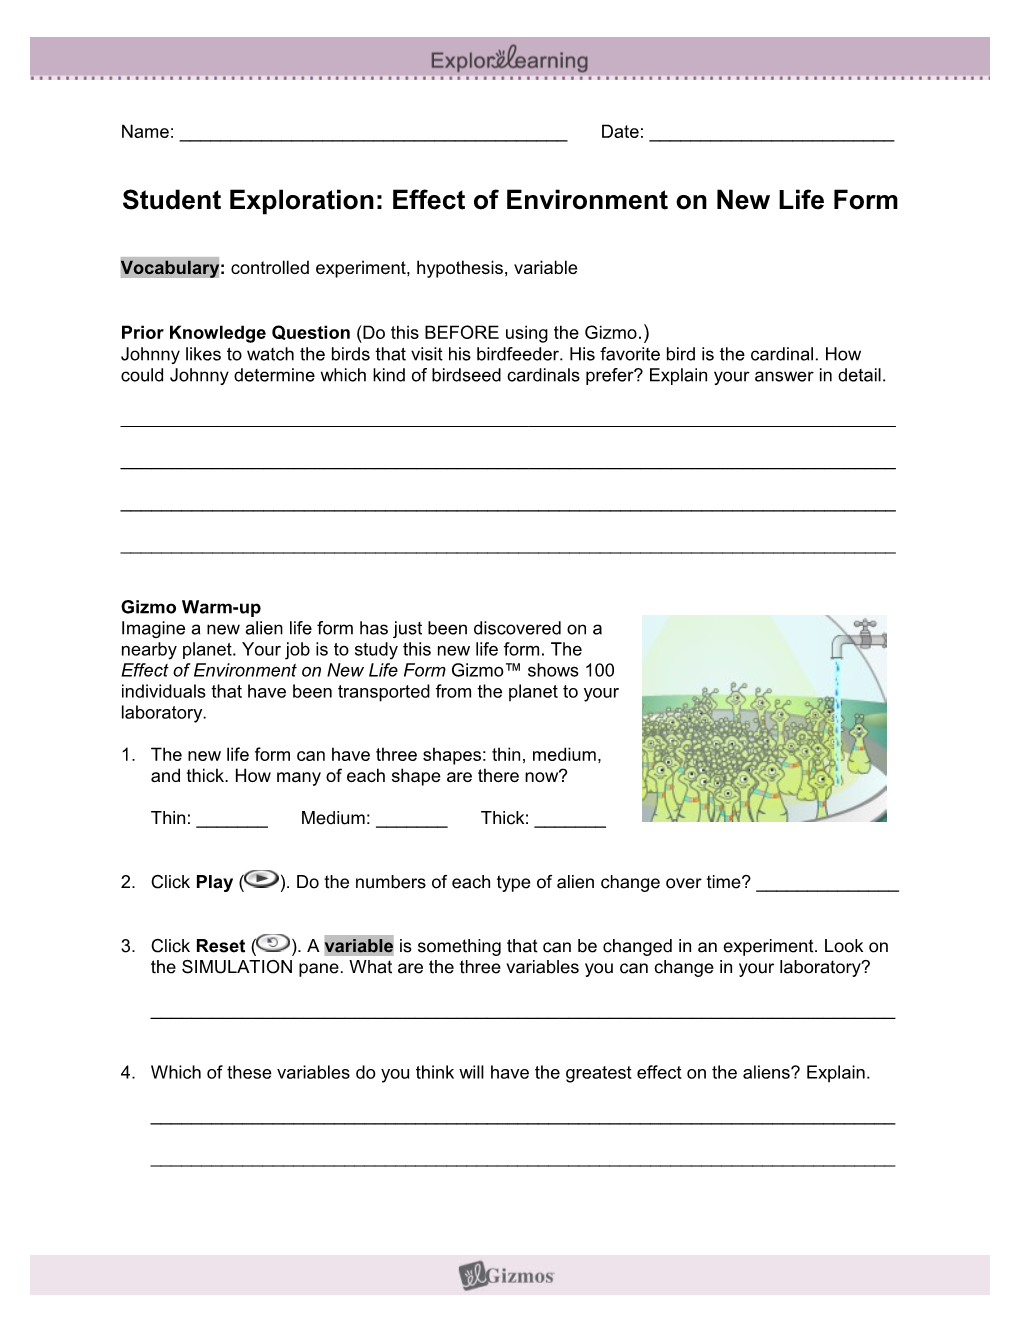 Student Exploration Sheet: Growing Plants s31